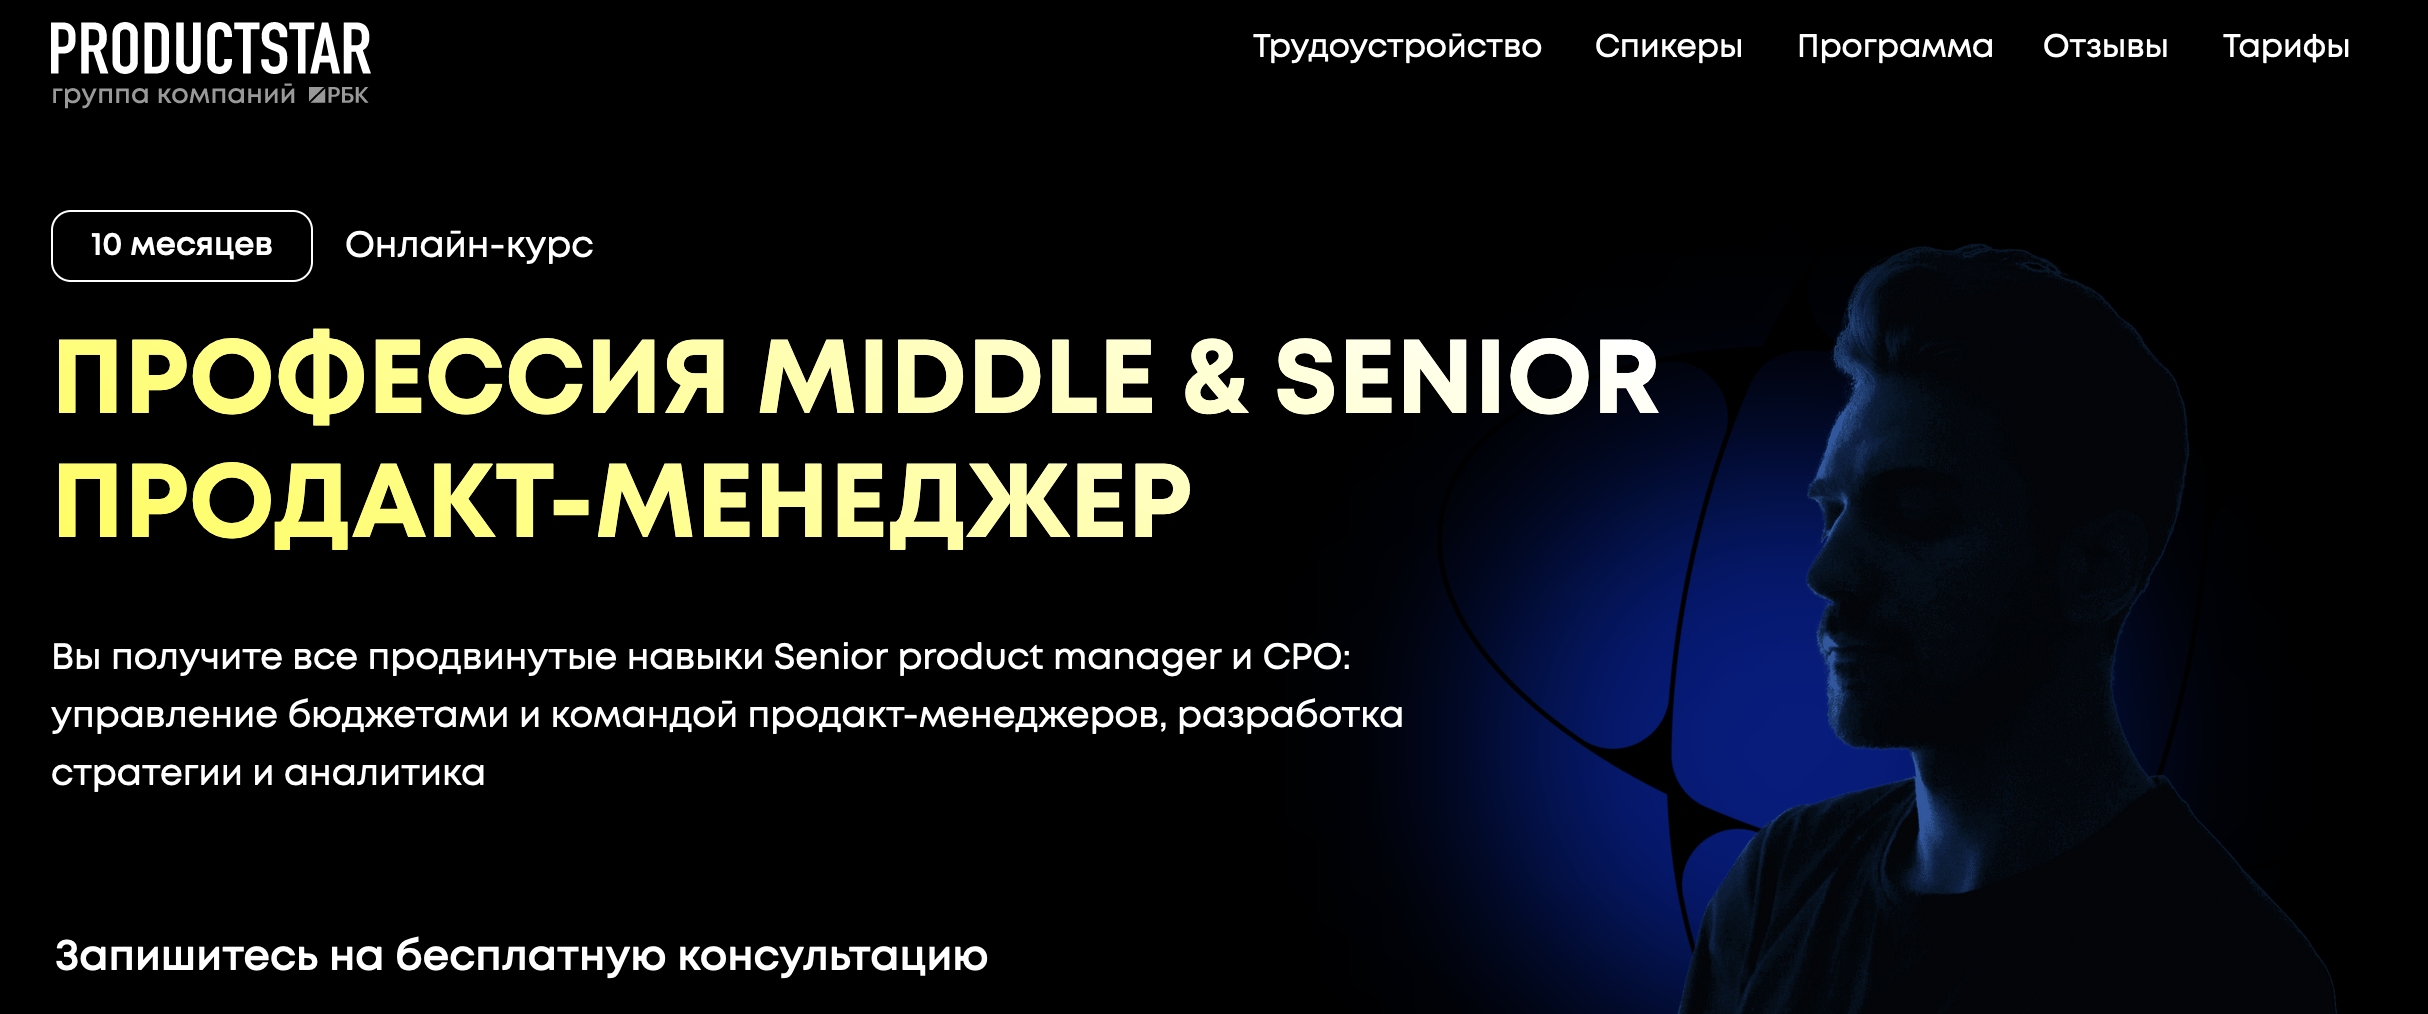 Productstar: Профессия Middle & Senior продакт-менеджер